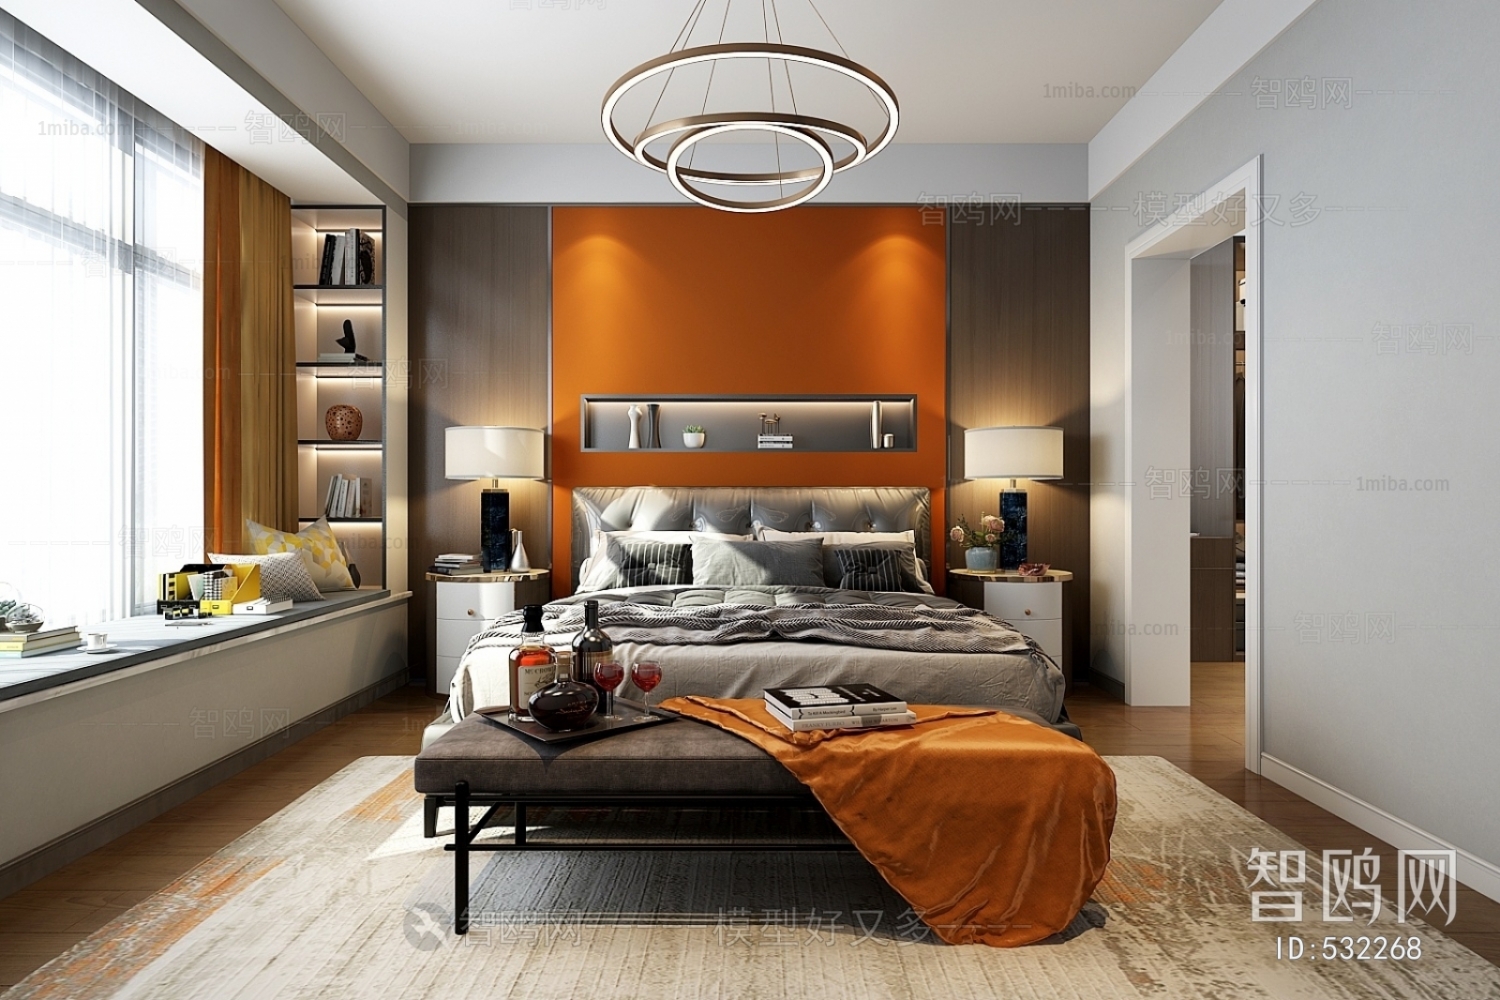 Modern Bedroom